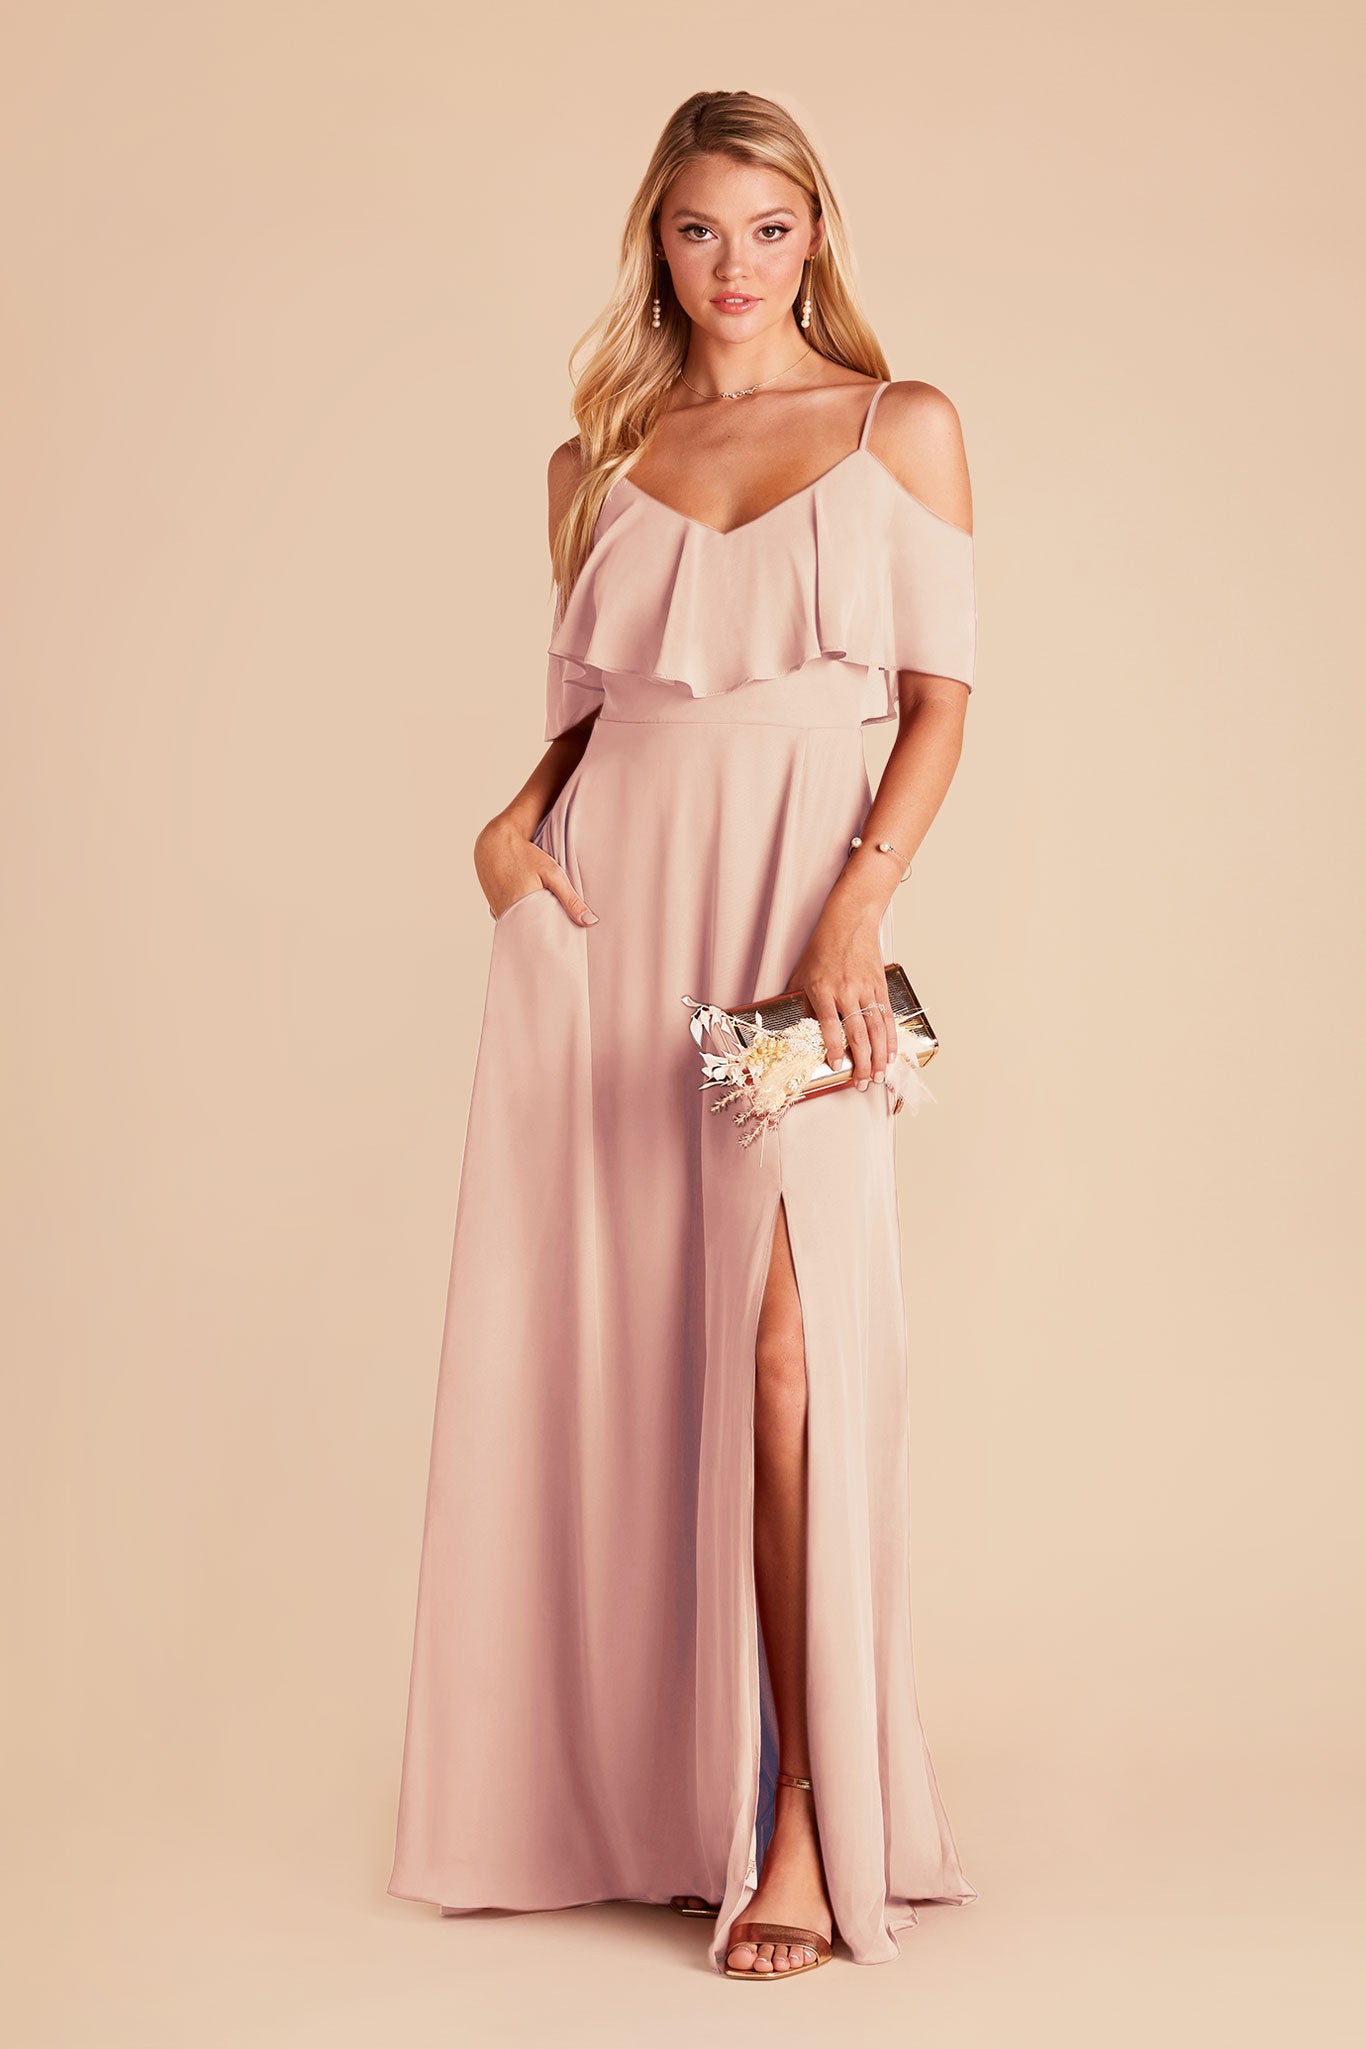 Blush Pink Jane Convertible Dress by Birdy Grey